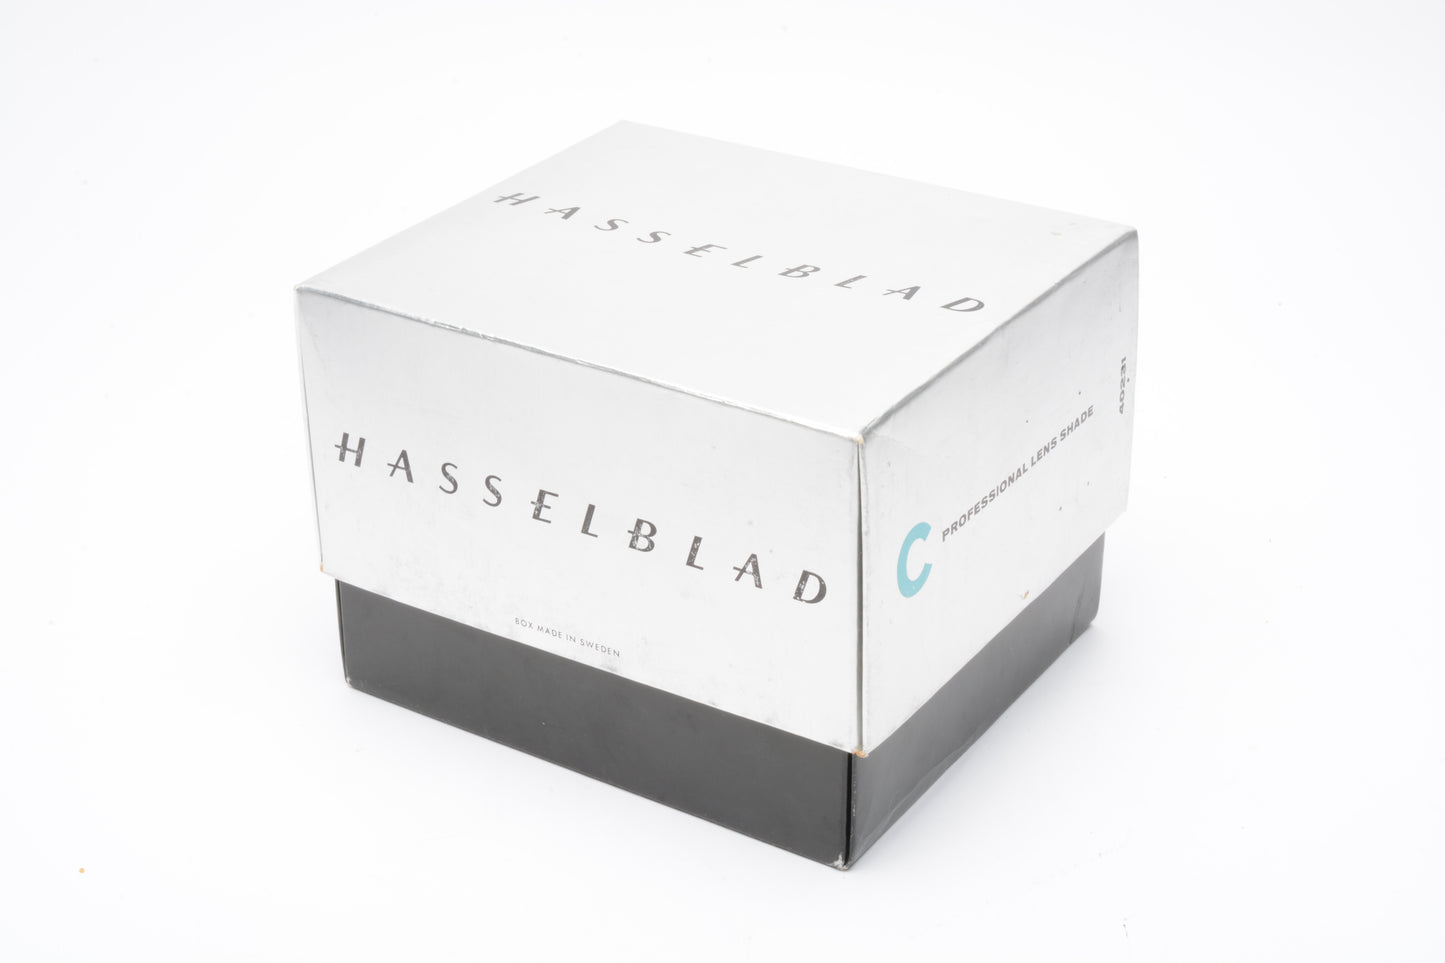 Hasselblad Pro Shade 40231  NIB